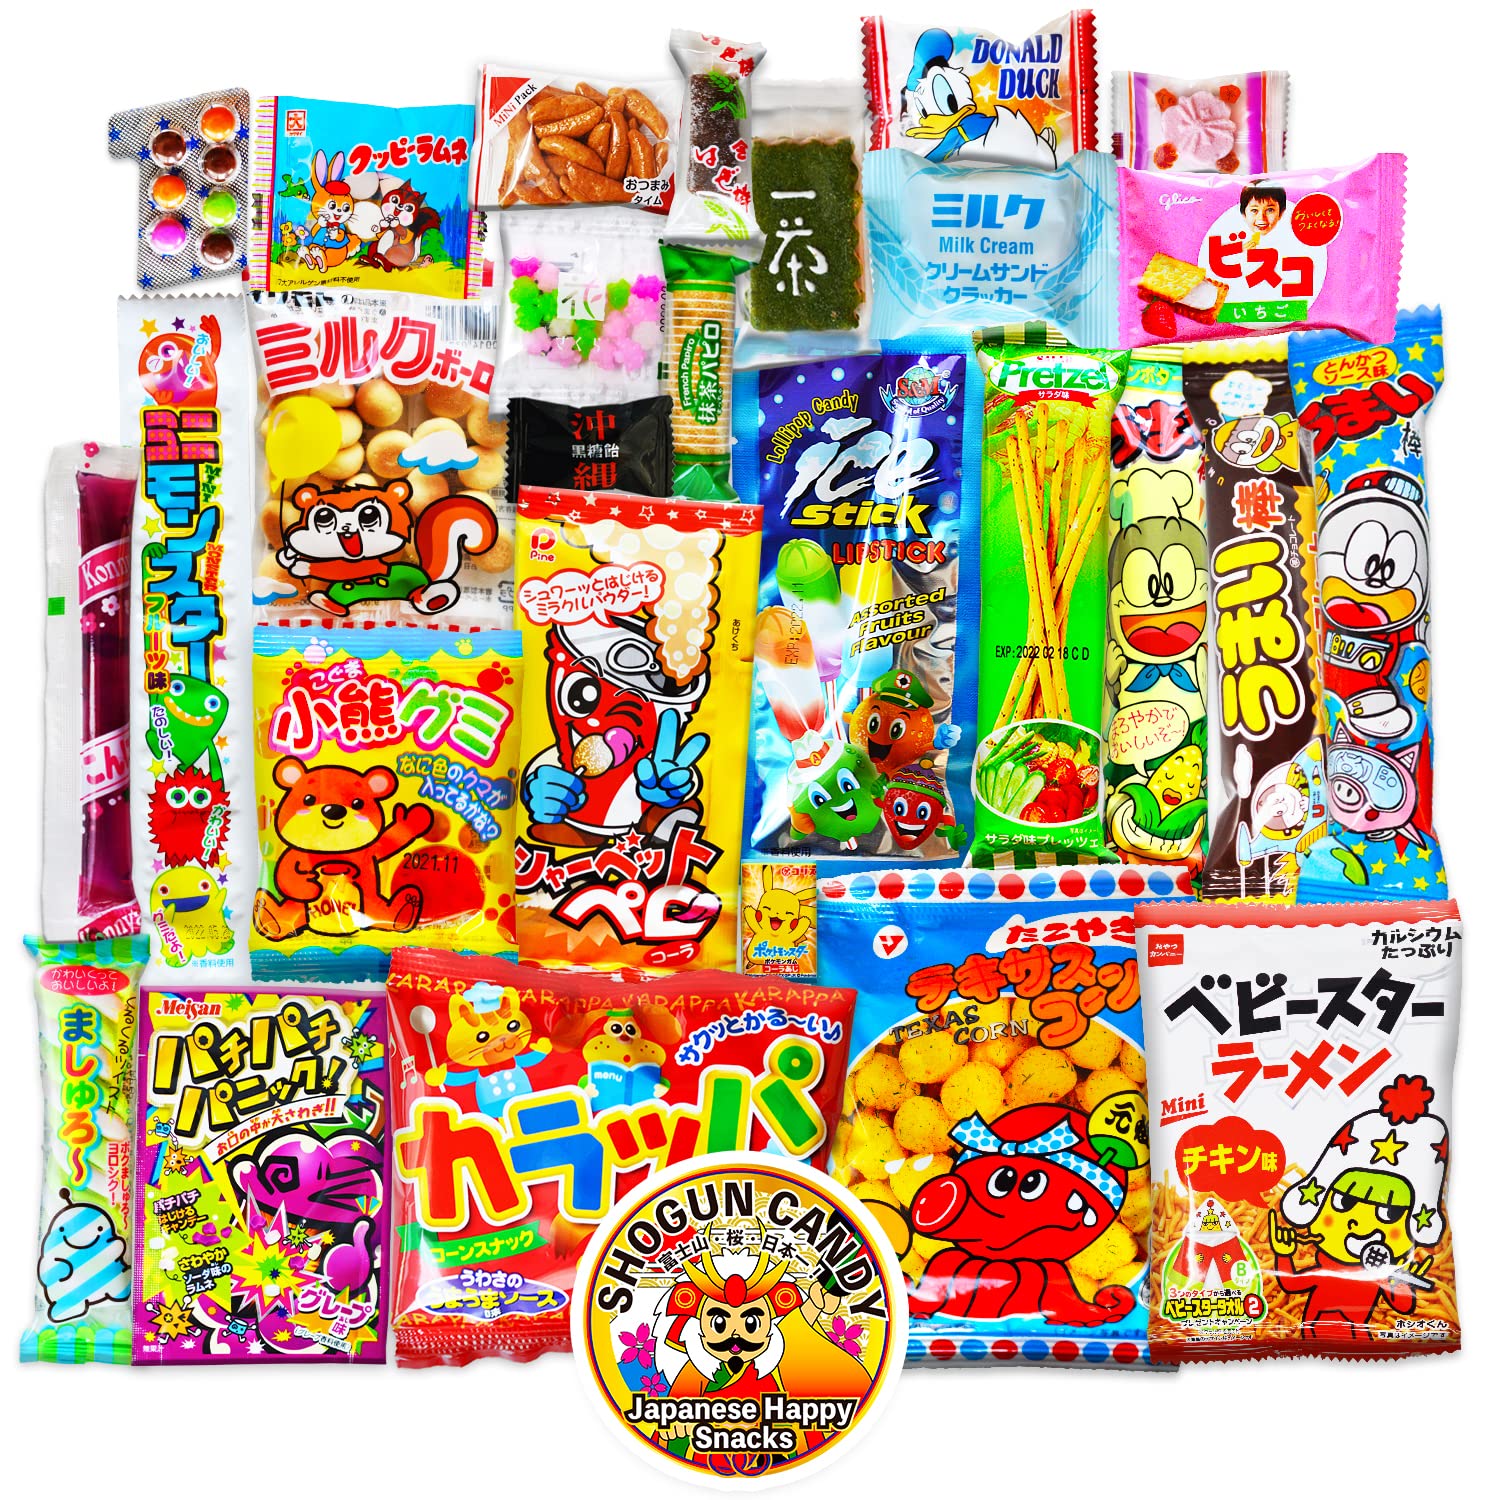 SHOGUN CANDY Japanese snacks assortment 30pcs full of dagashi.